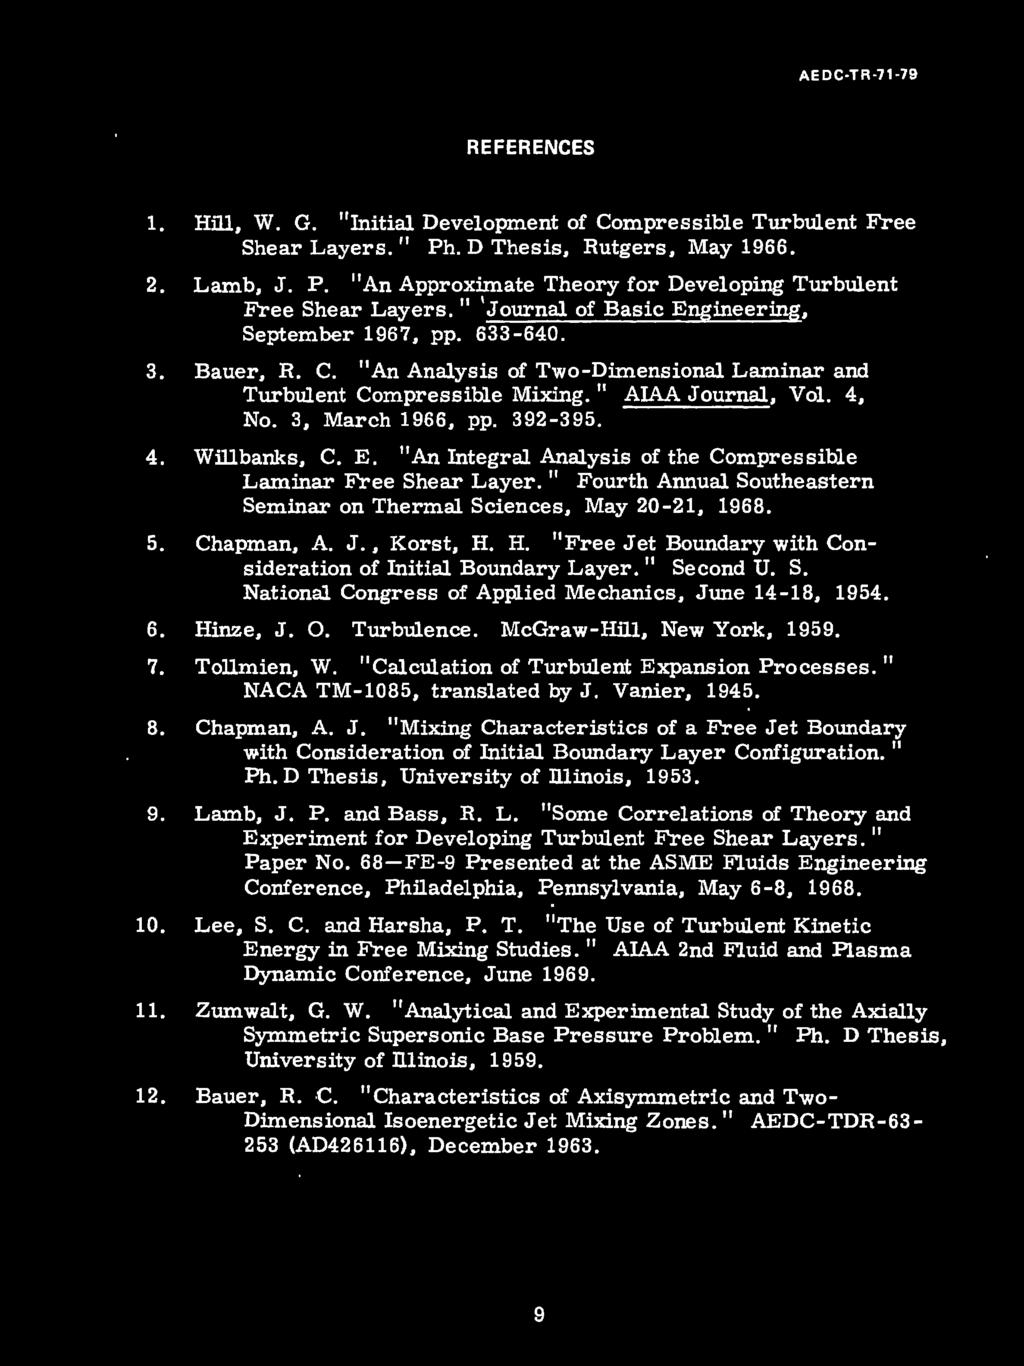 4. Willbanks, C. E. "An Integral Analysis f the Cmpressible Laminar Free Shear Layer. " Furth Annual Sutheastern Seminar n Thermal Sciences, May 20-21, 1968. 5. Chapman, A. J., Krst, H.